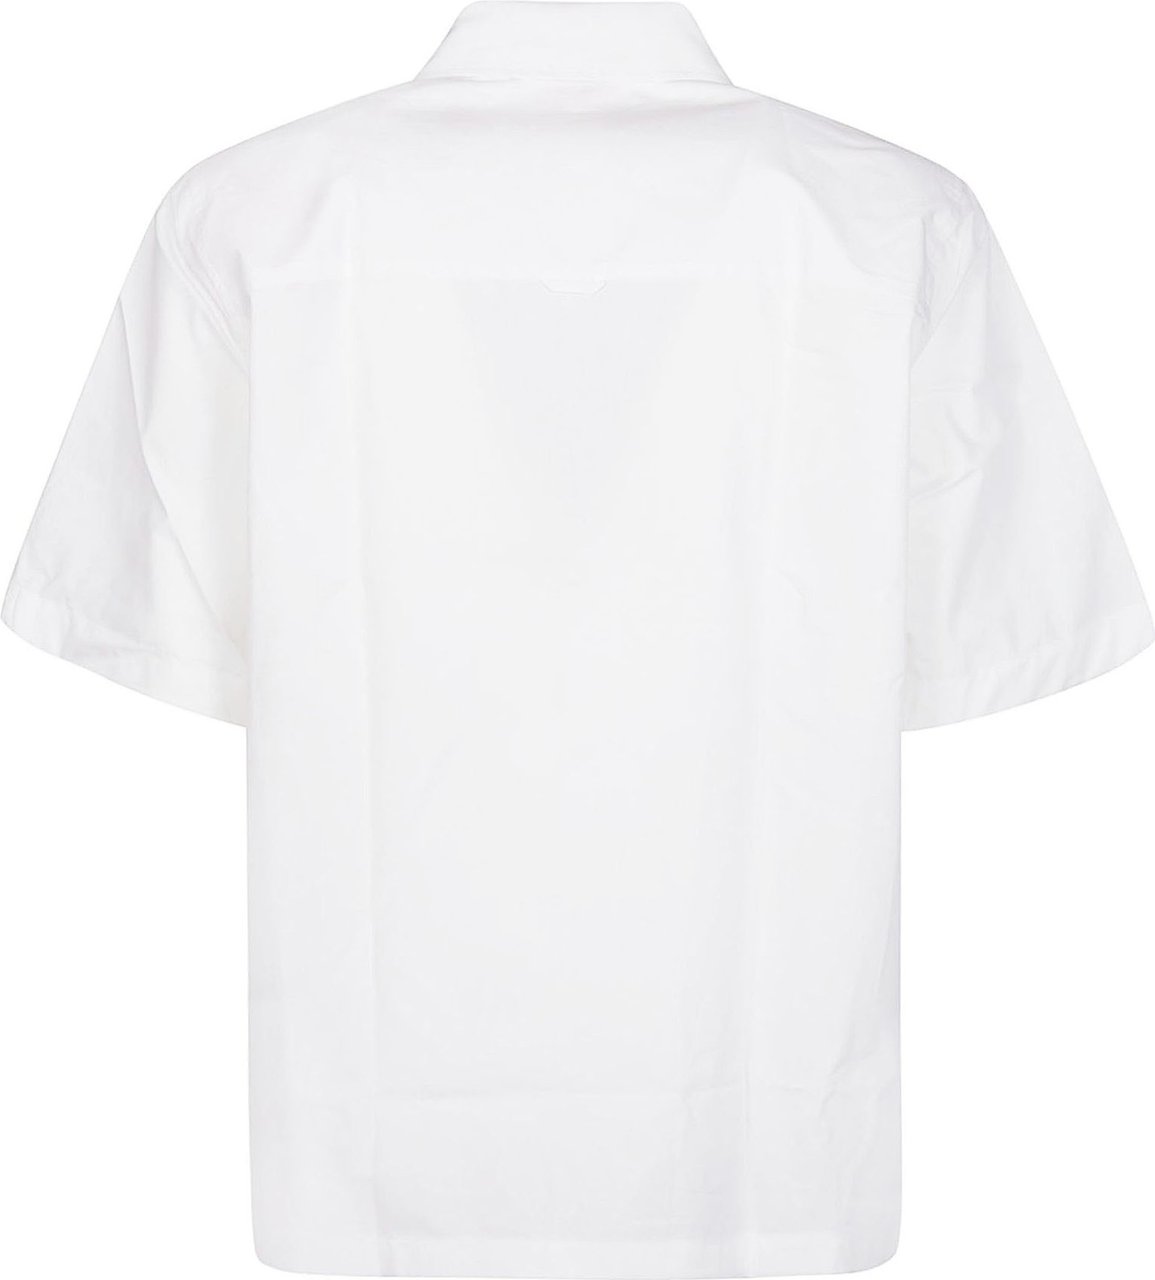 Diesel S-mac 22 B Short Sleeve Shirt White Wit